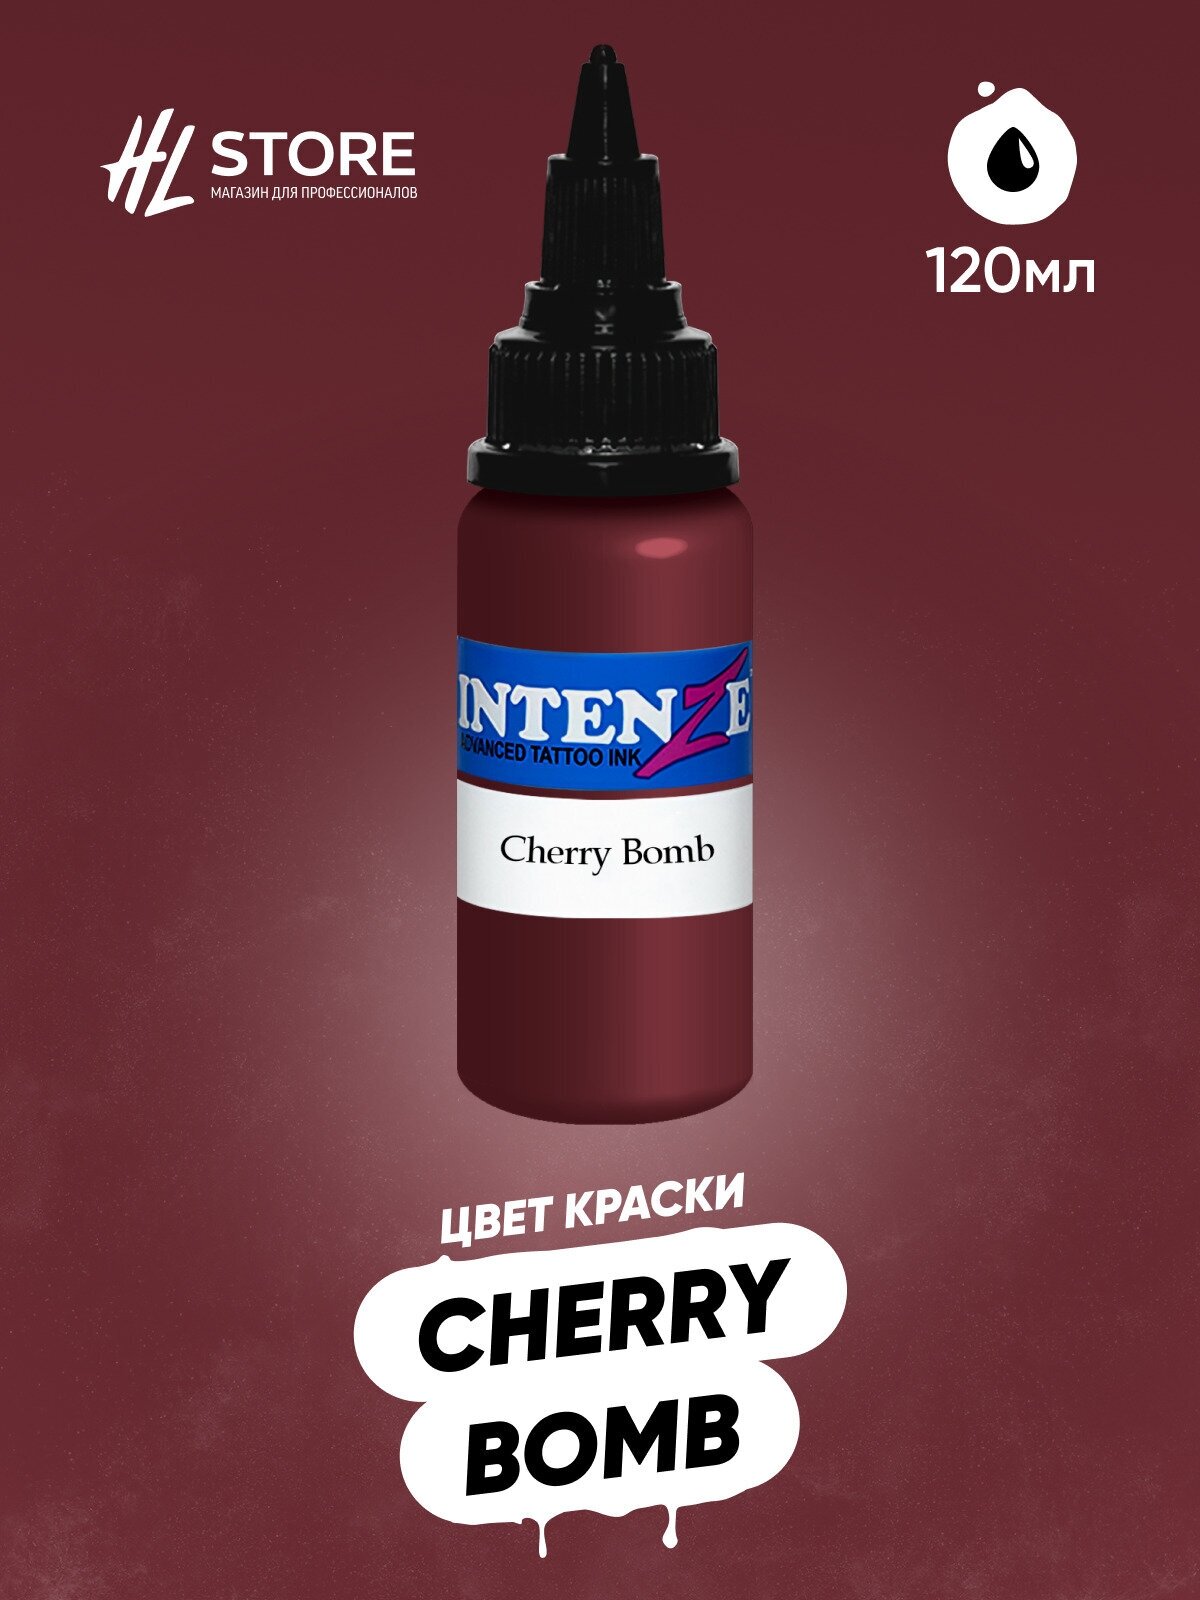 Intenze Cherry Bomb 120 мл — купить в интернет-магазине по низкой цене на Яндекс Маркете